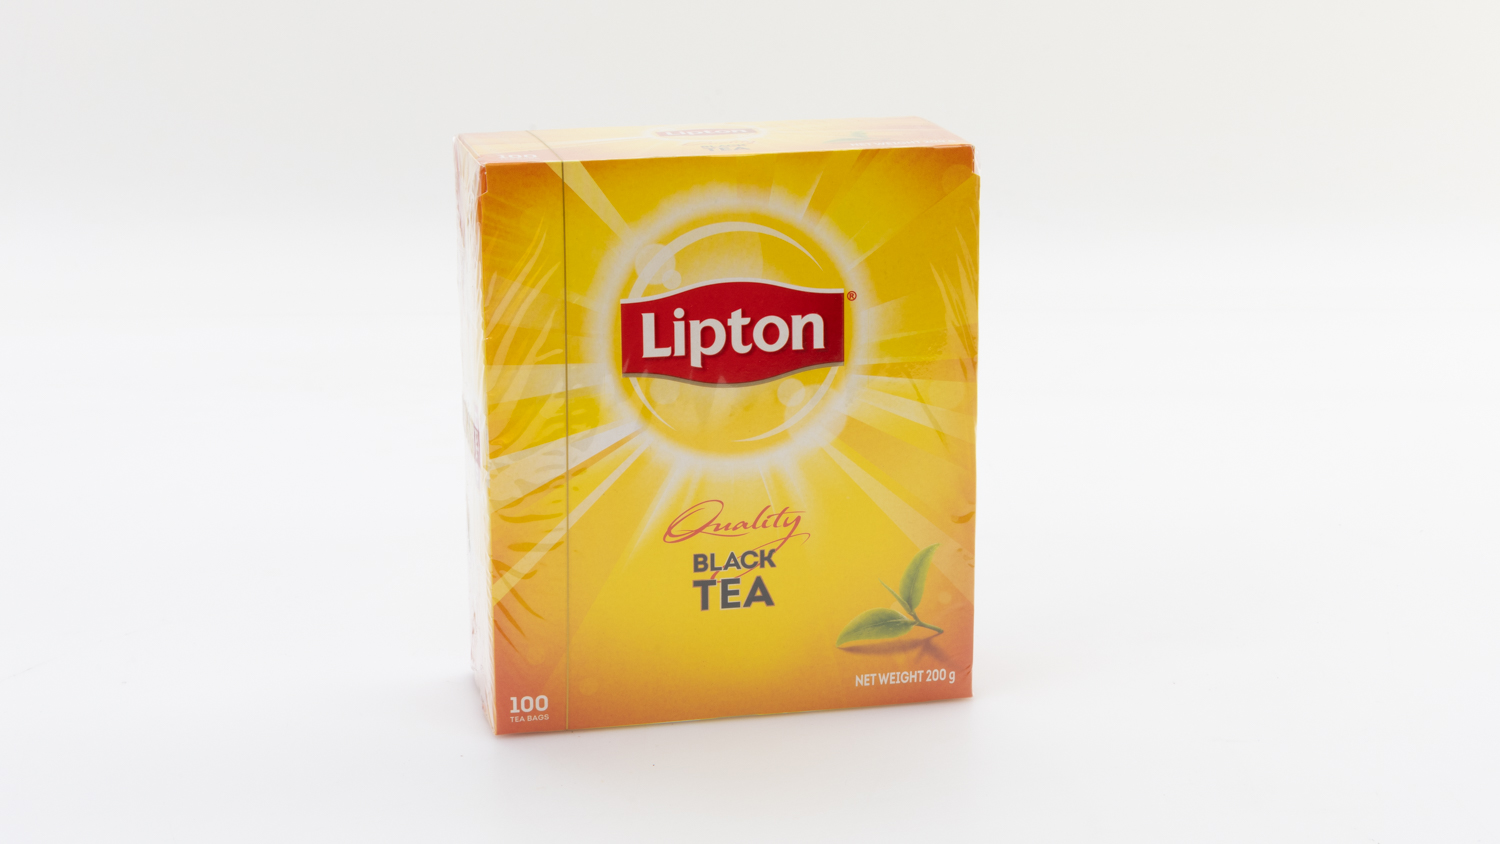 Lipton Quality Black Tea carousel image